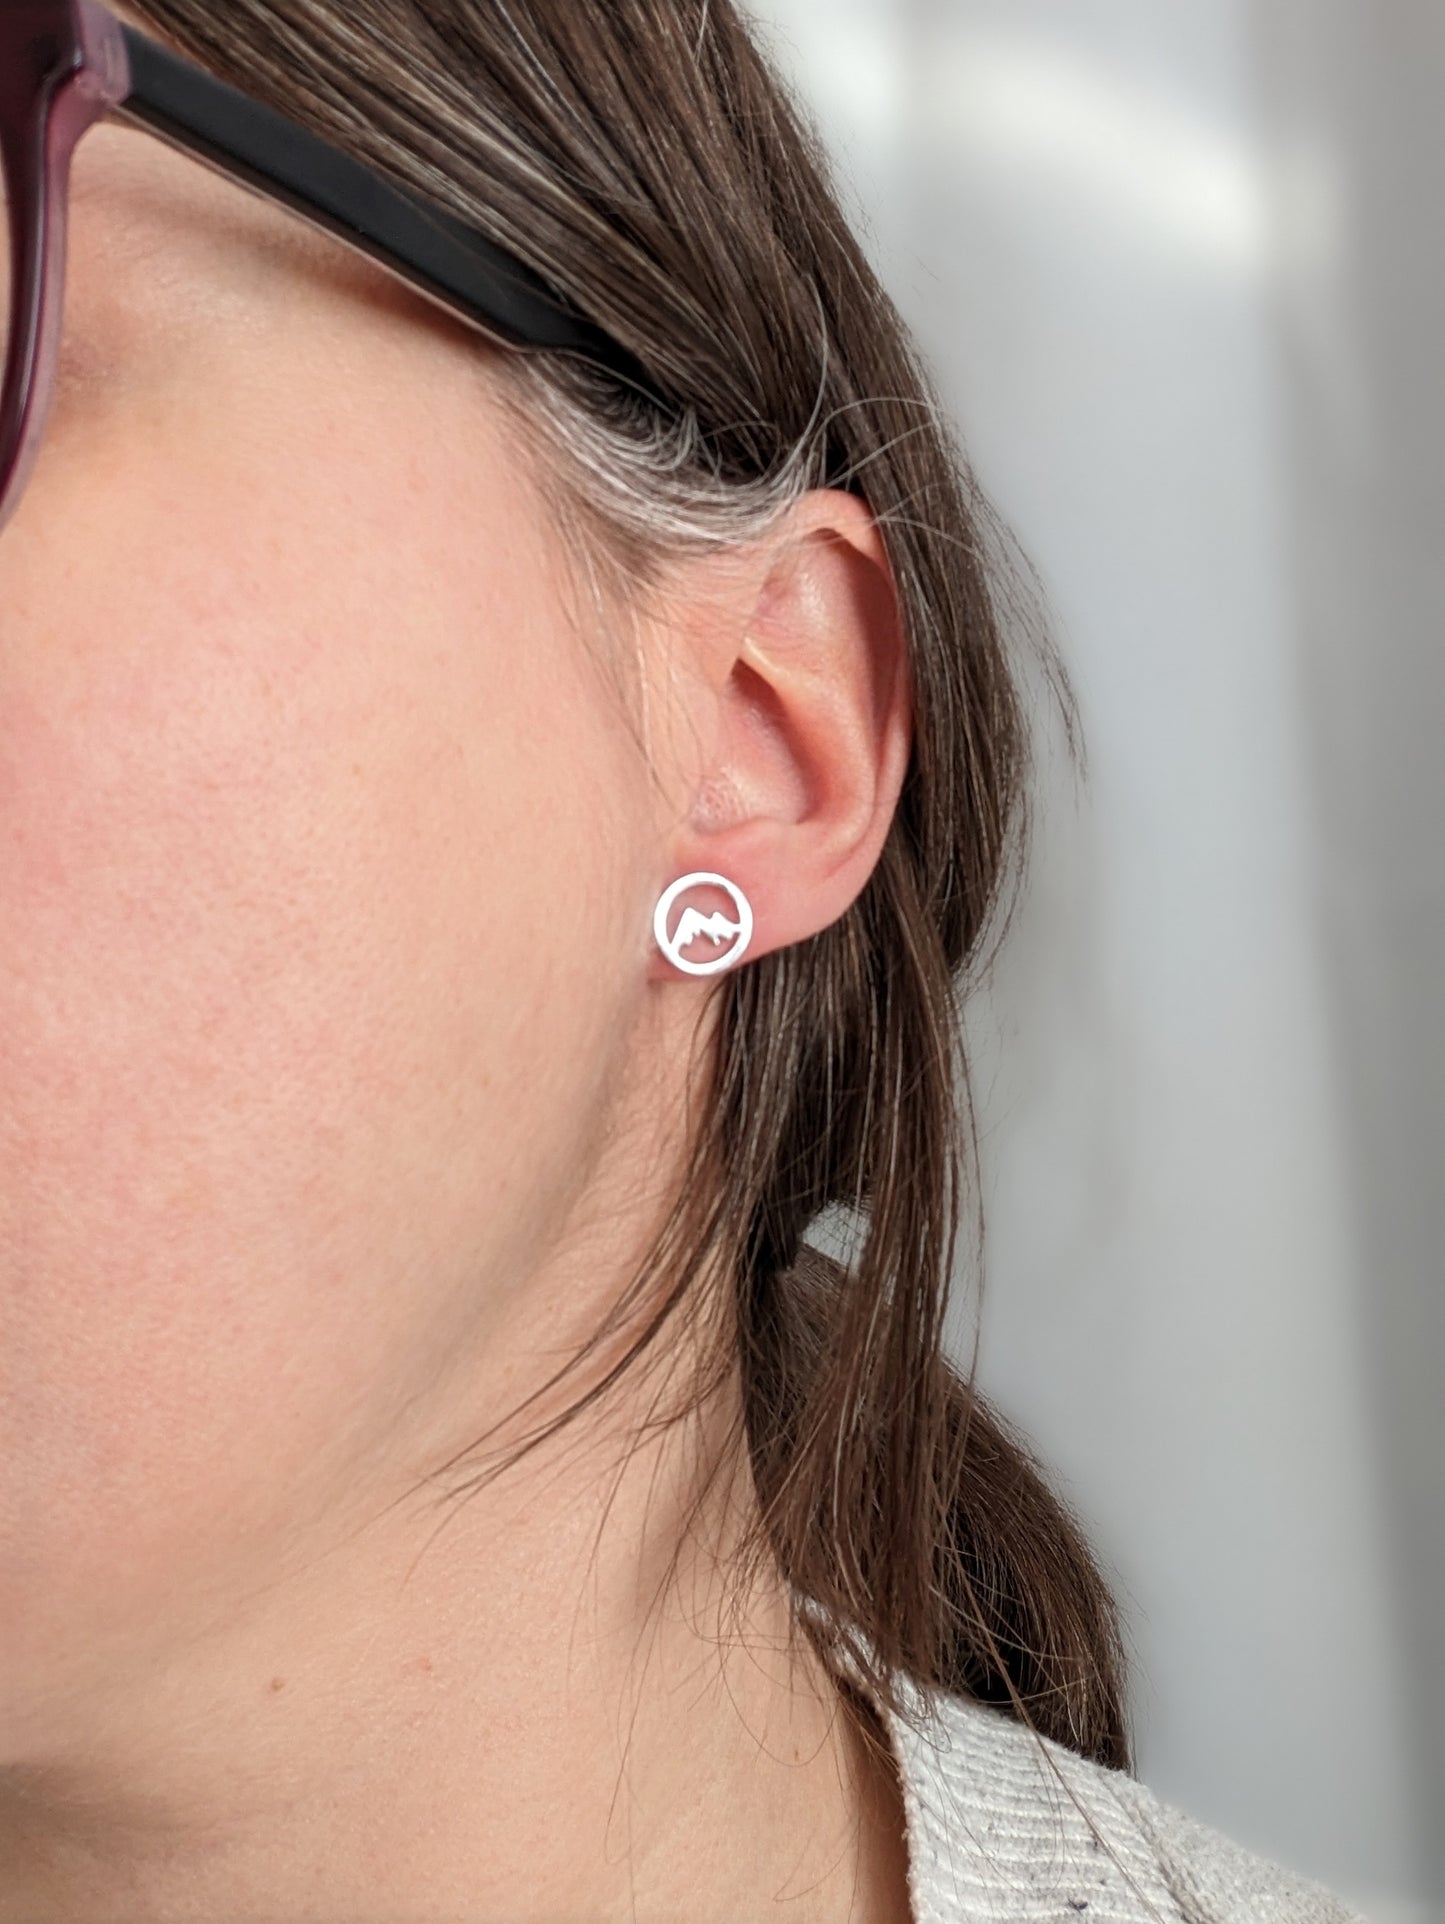 Boucles d'oreilles montagne rond //  mountain stud earrings // stainless steel earrings // minimalist jewelry // (bo-1786)